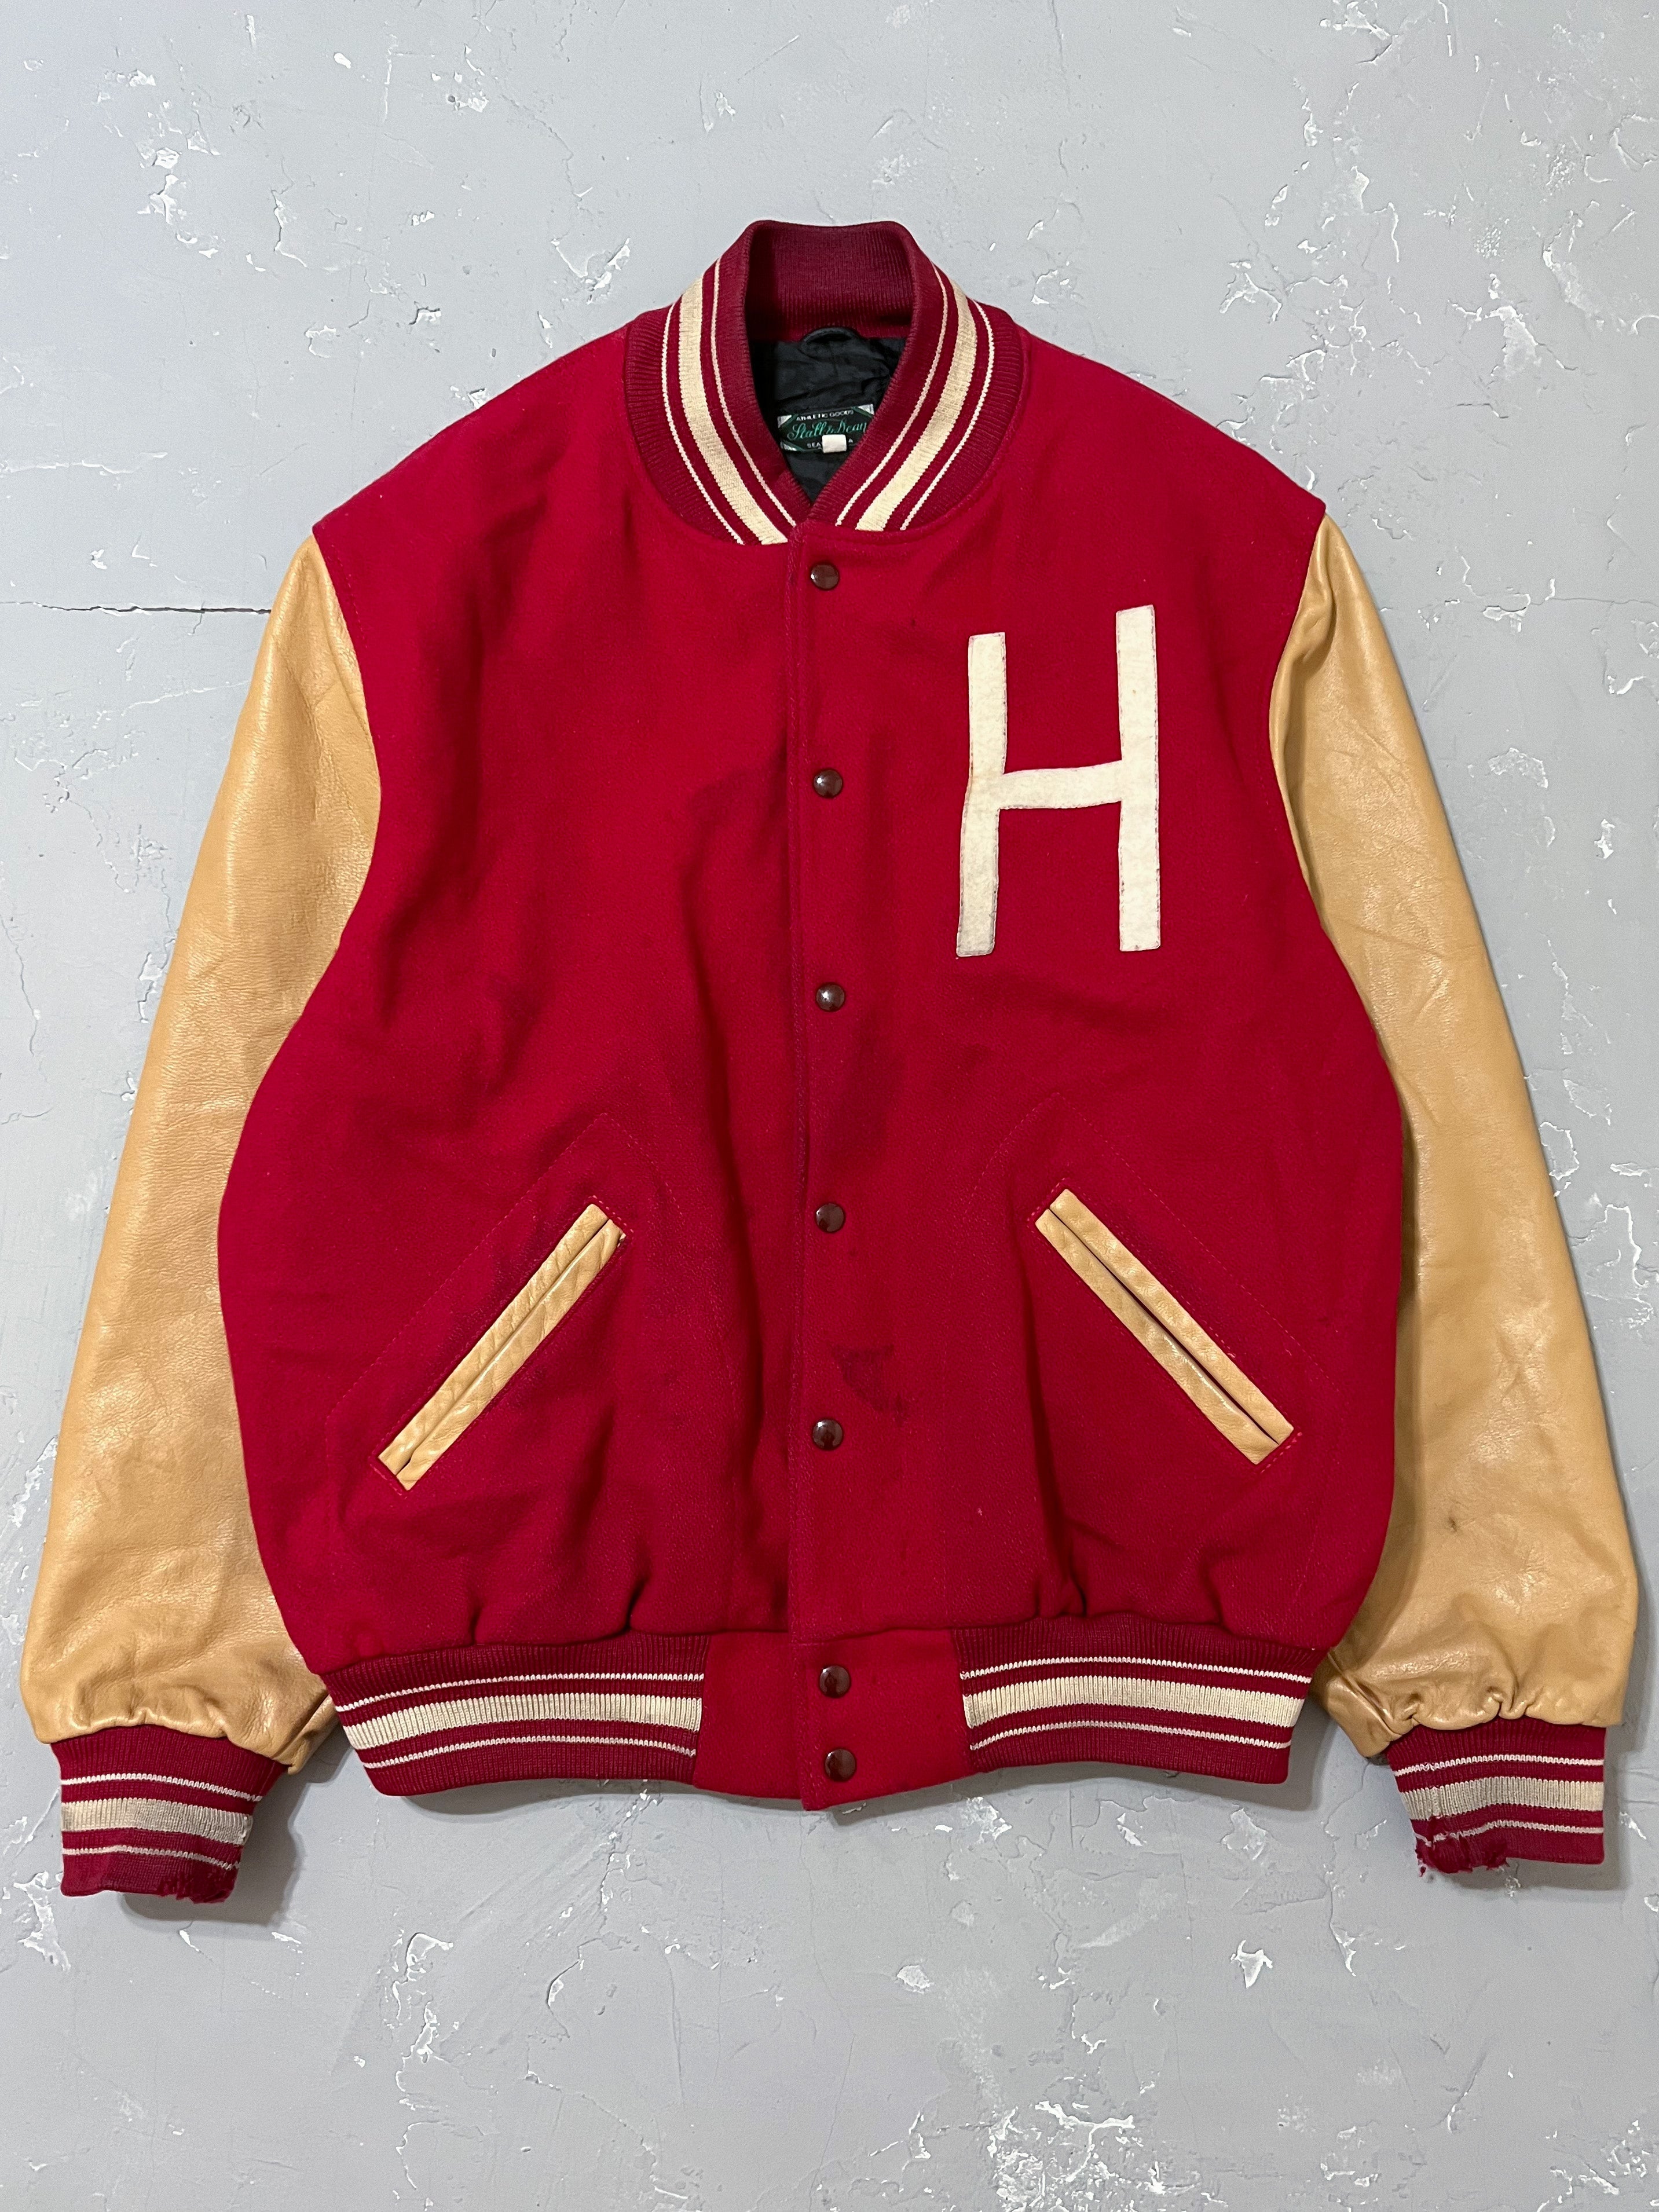 Official Harvard University Go Crimson Zip Up Track Jacket Size L | eBay